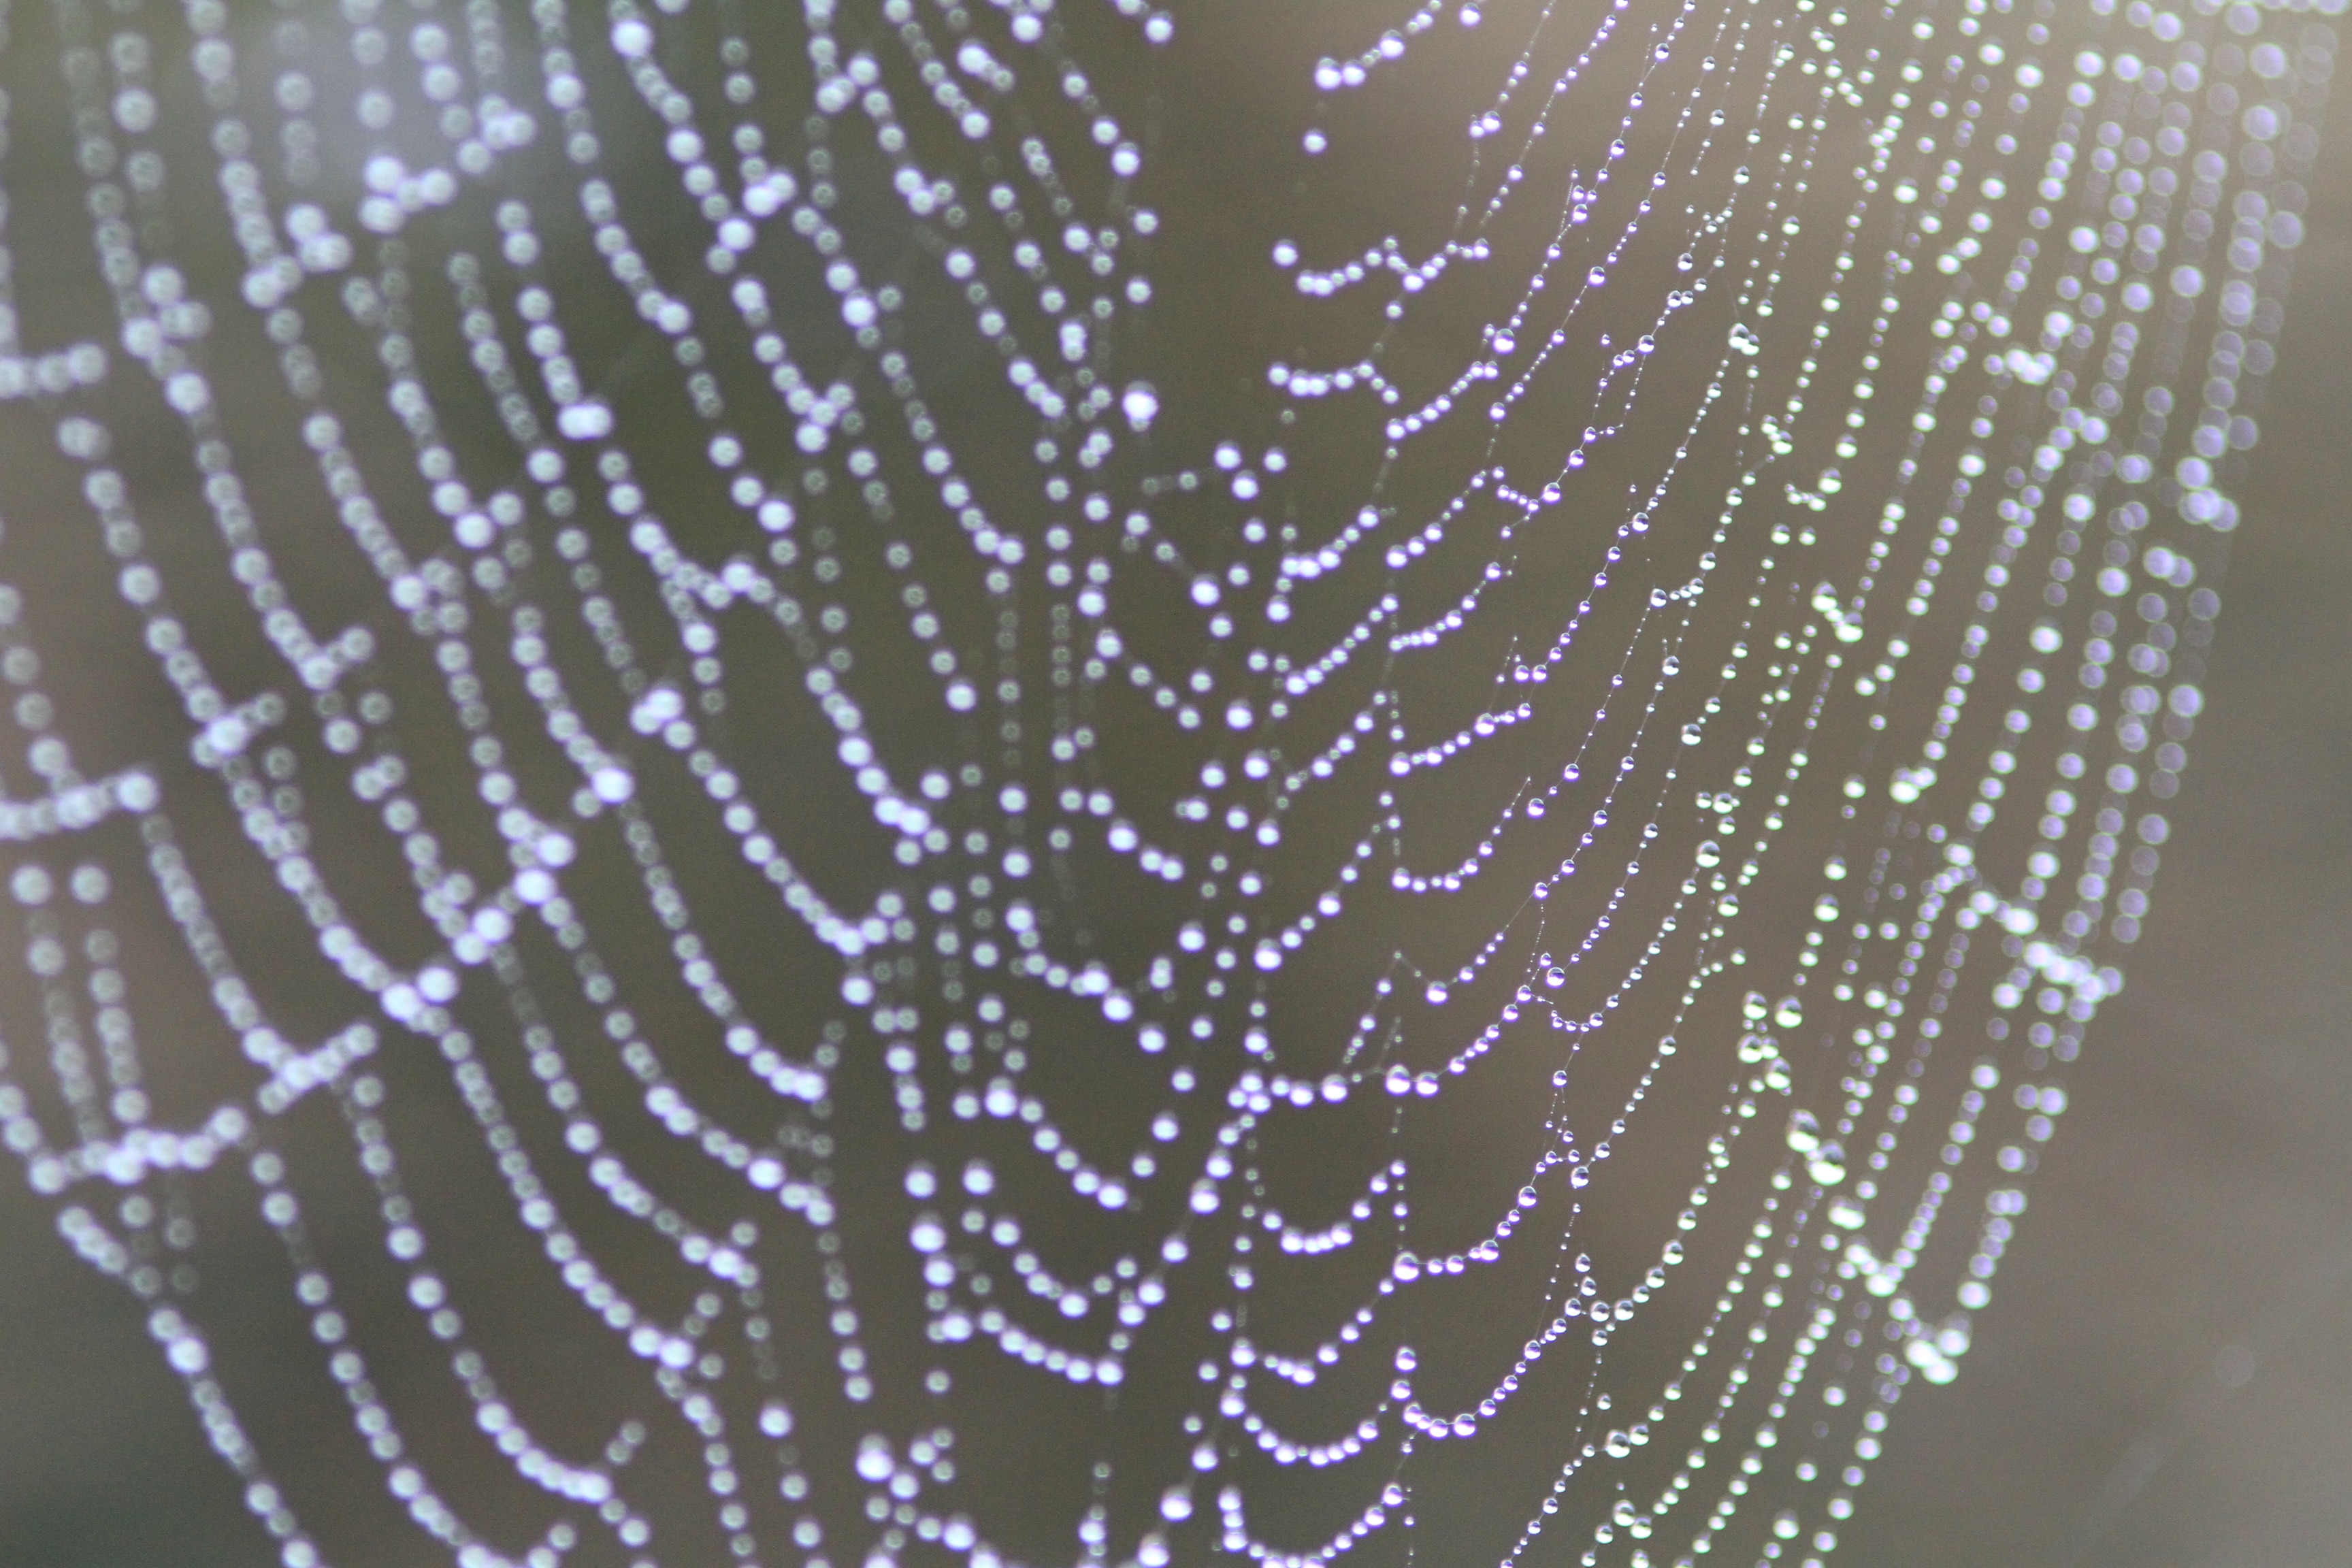 droplets on spider cobweb